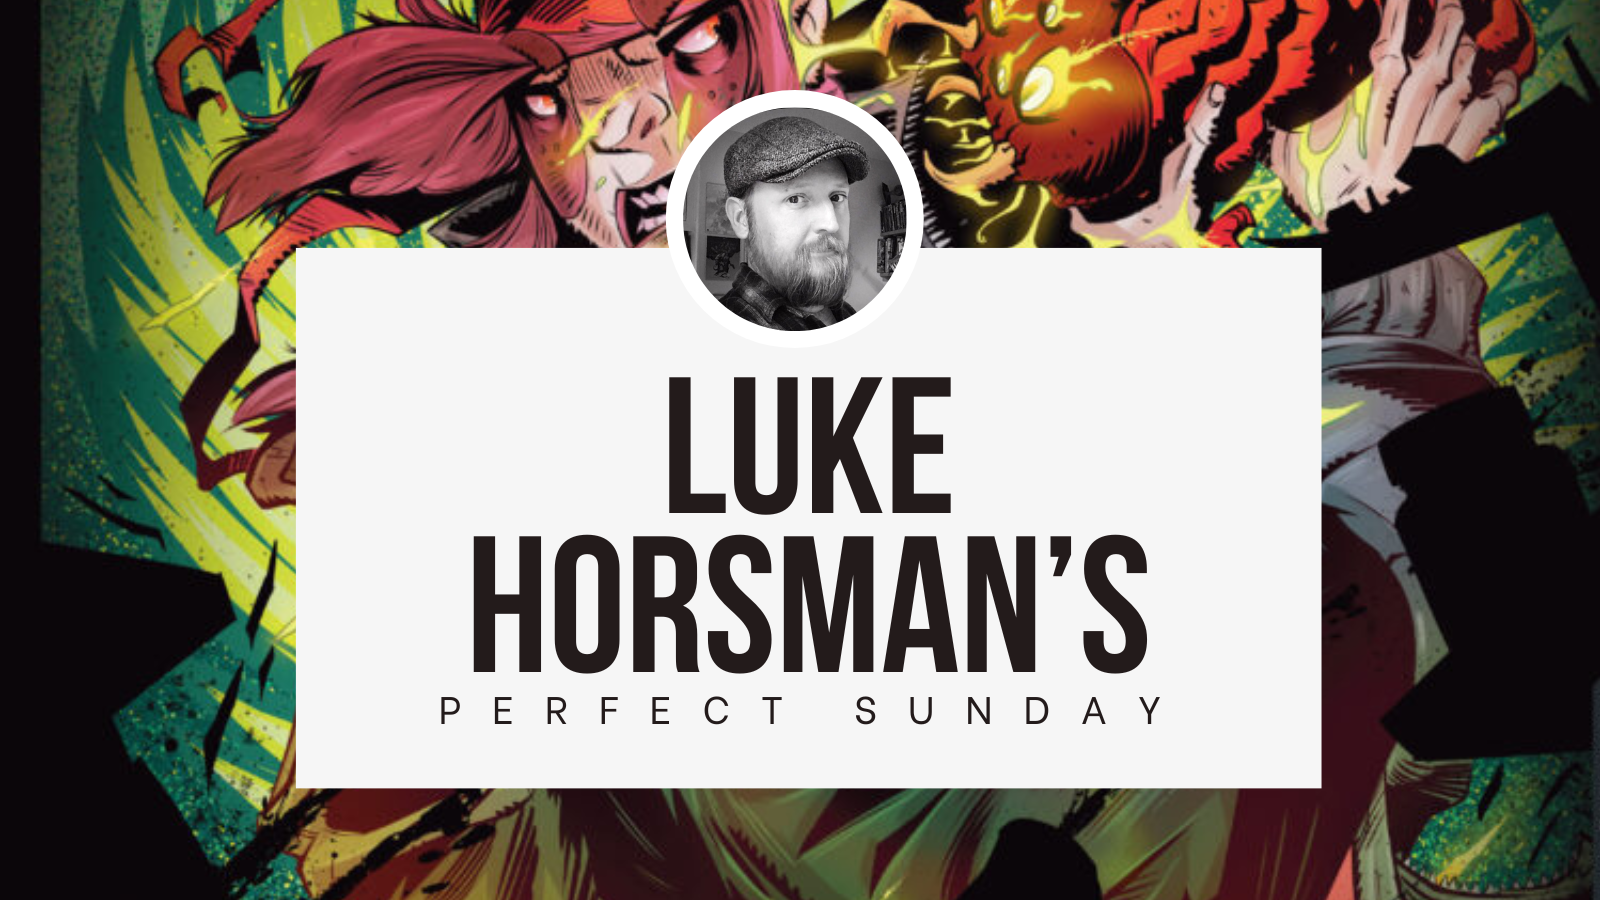 A perfect Sunday with... Luke Horsman